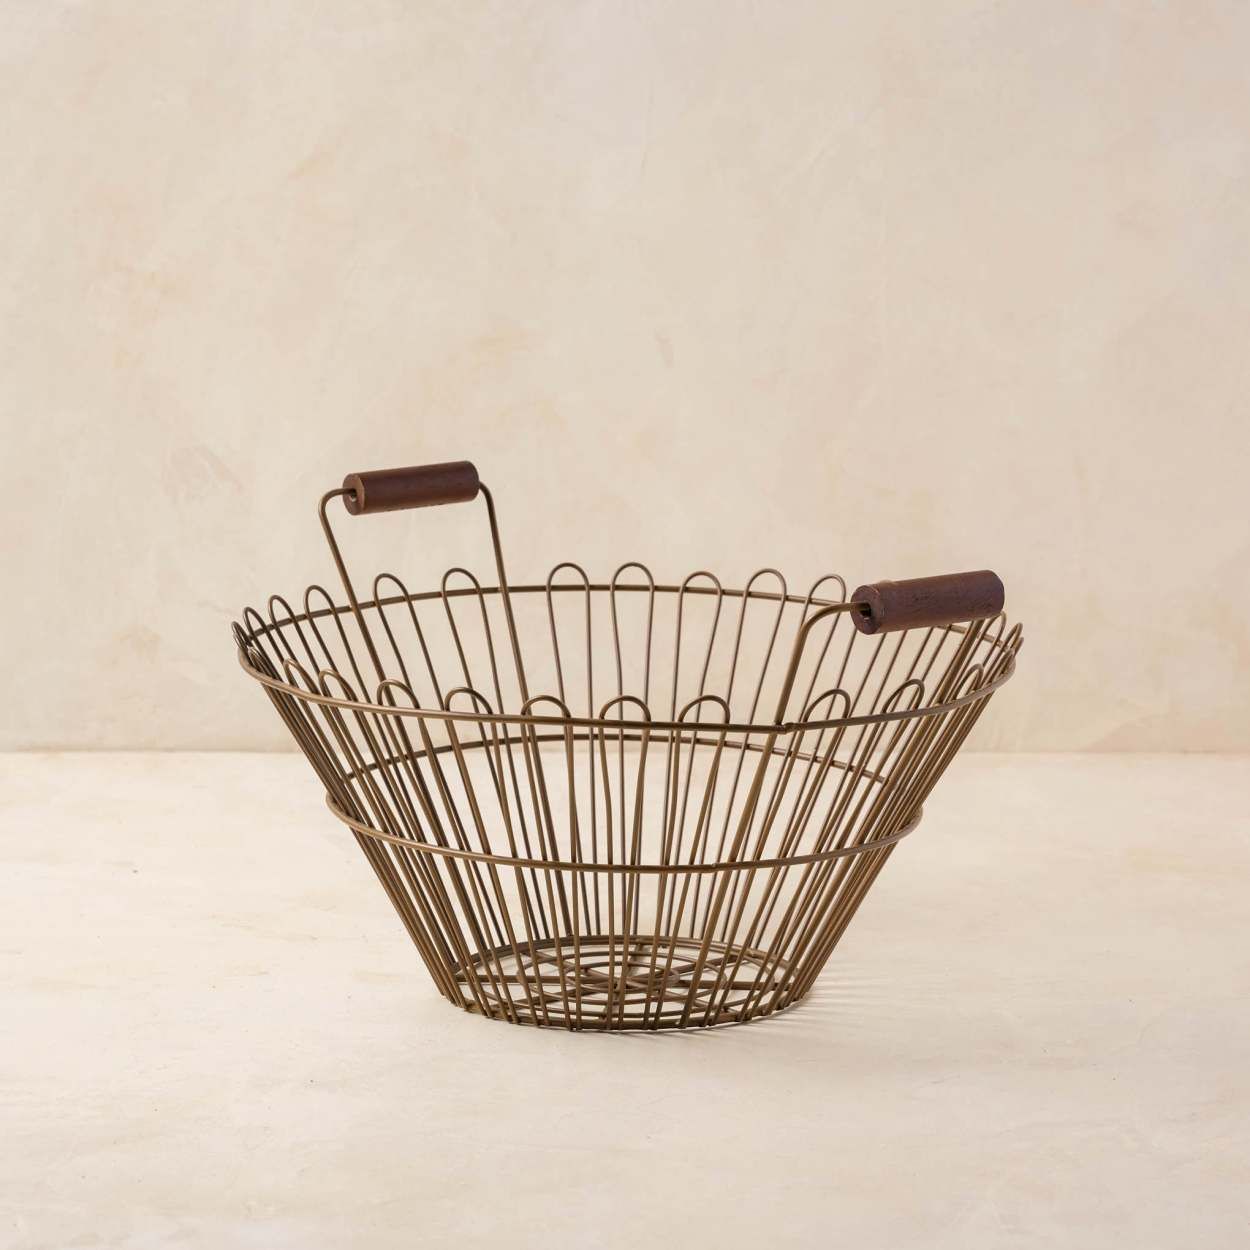 Vintage Inspired Wire Basket | Magnolia